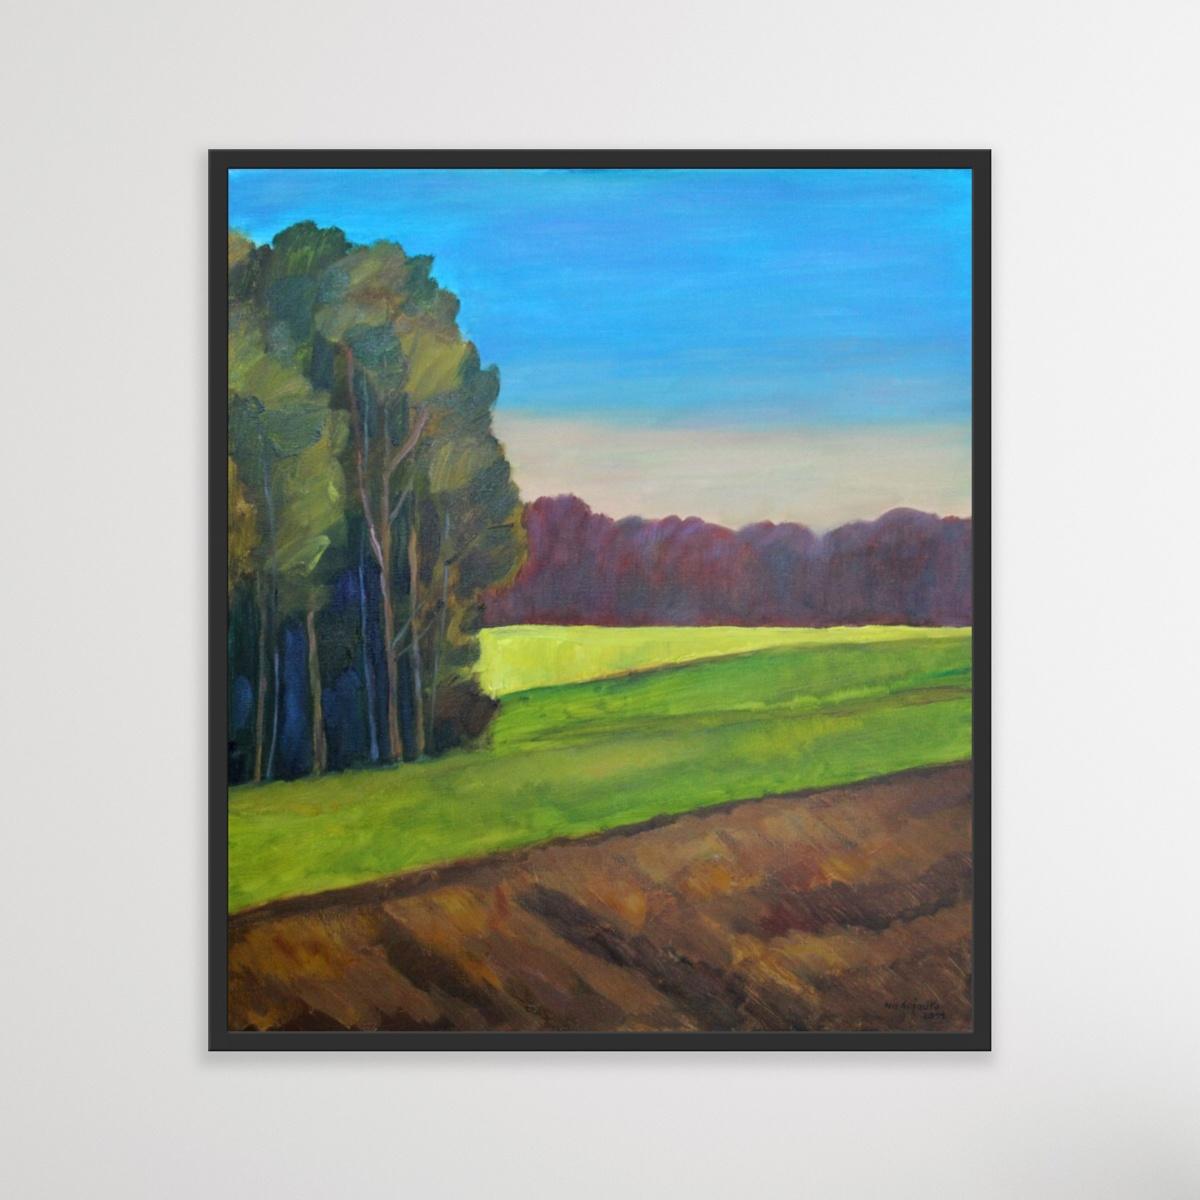 Autumn silence - XXI century, Oil landscape painting, Colourful - Contemporary Painting by Marek Niedojadło